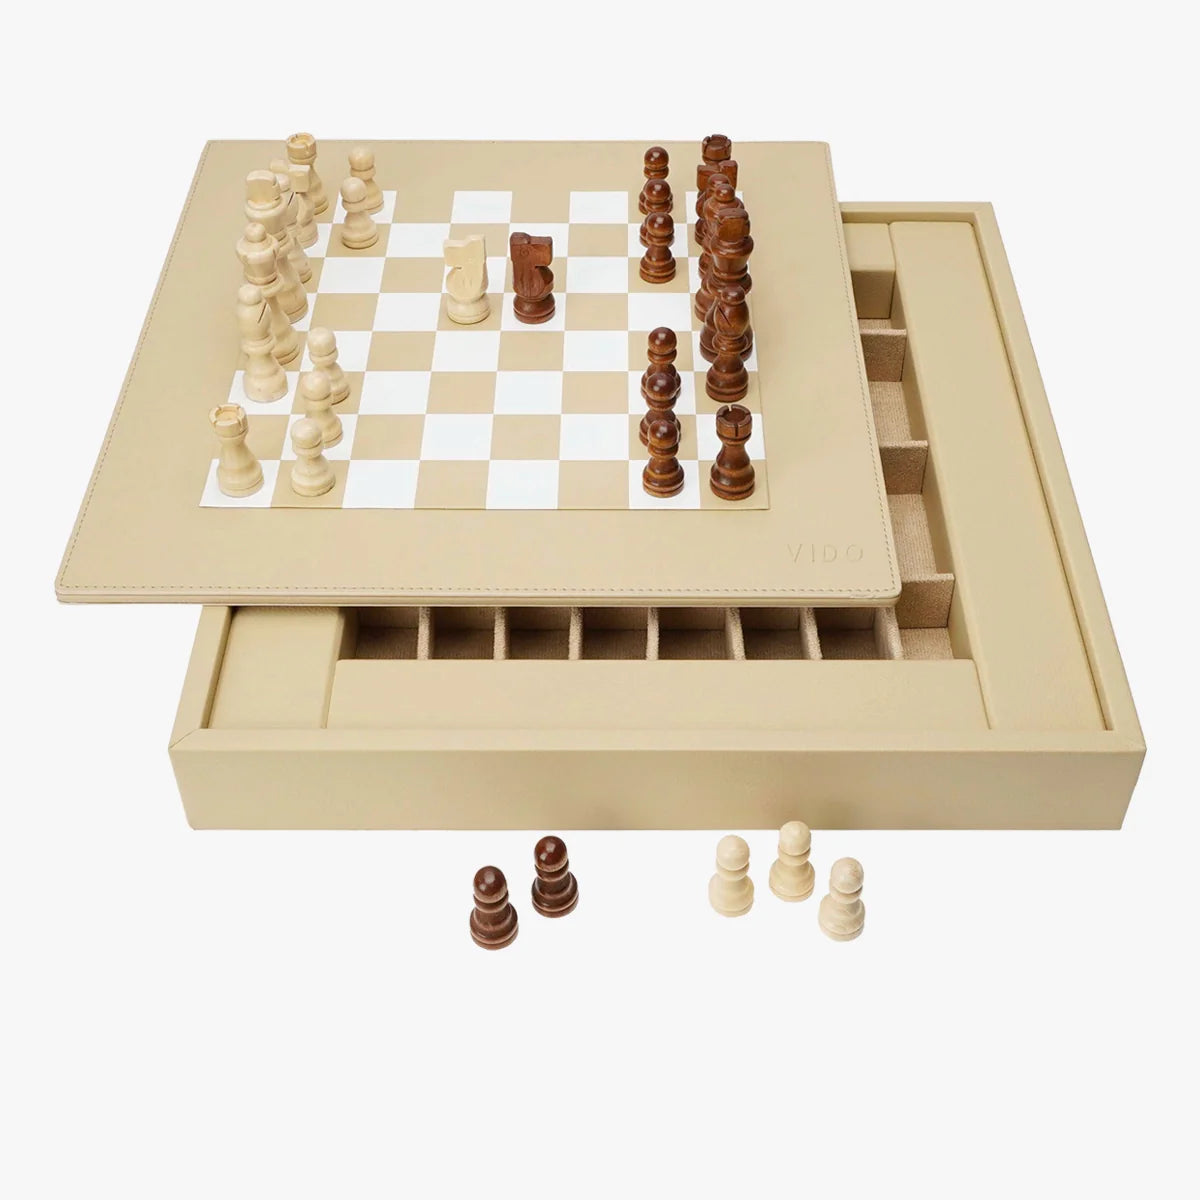 VIDO Luxury Chess Box Sand Beige Vegan Leather